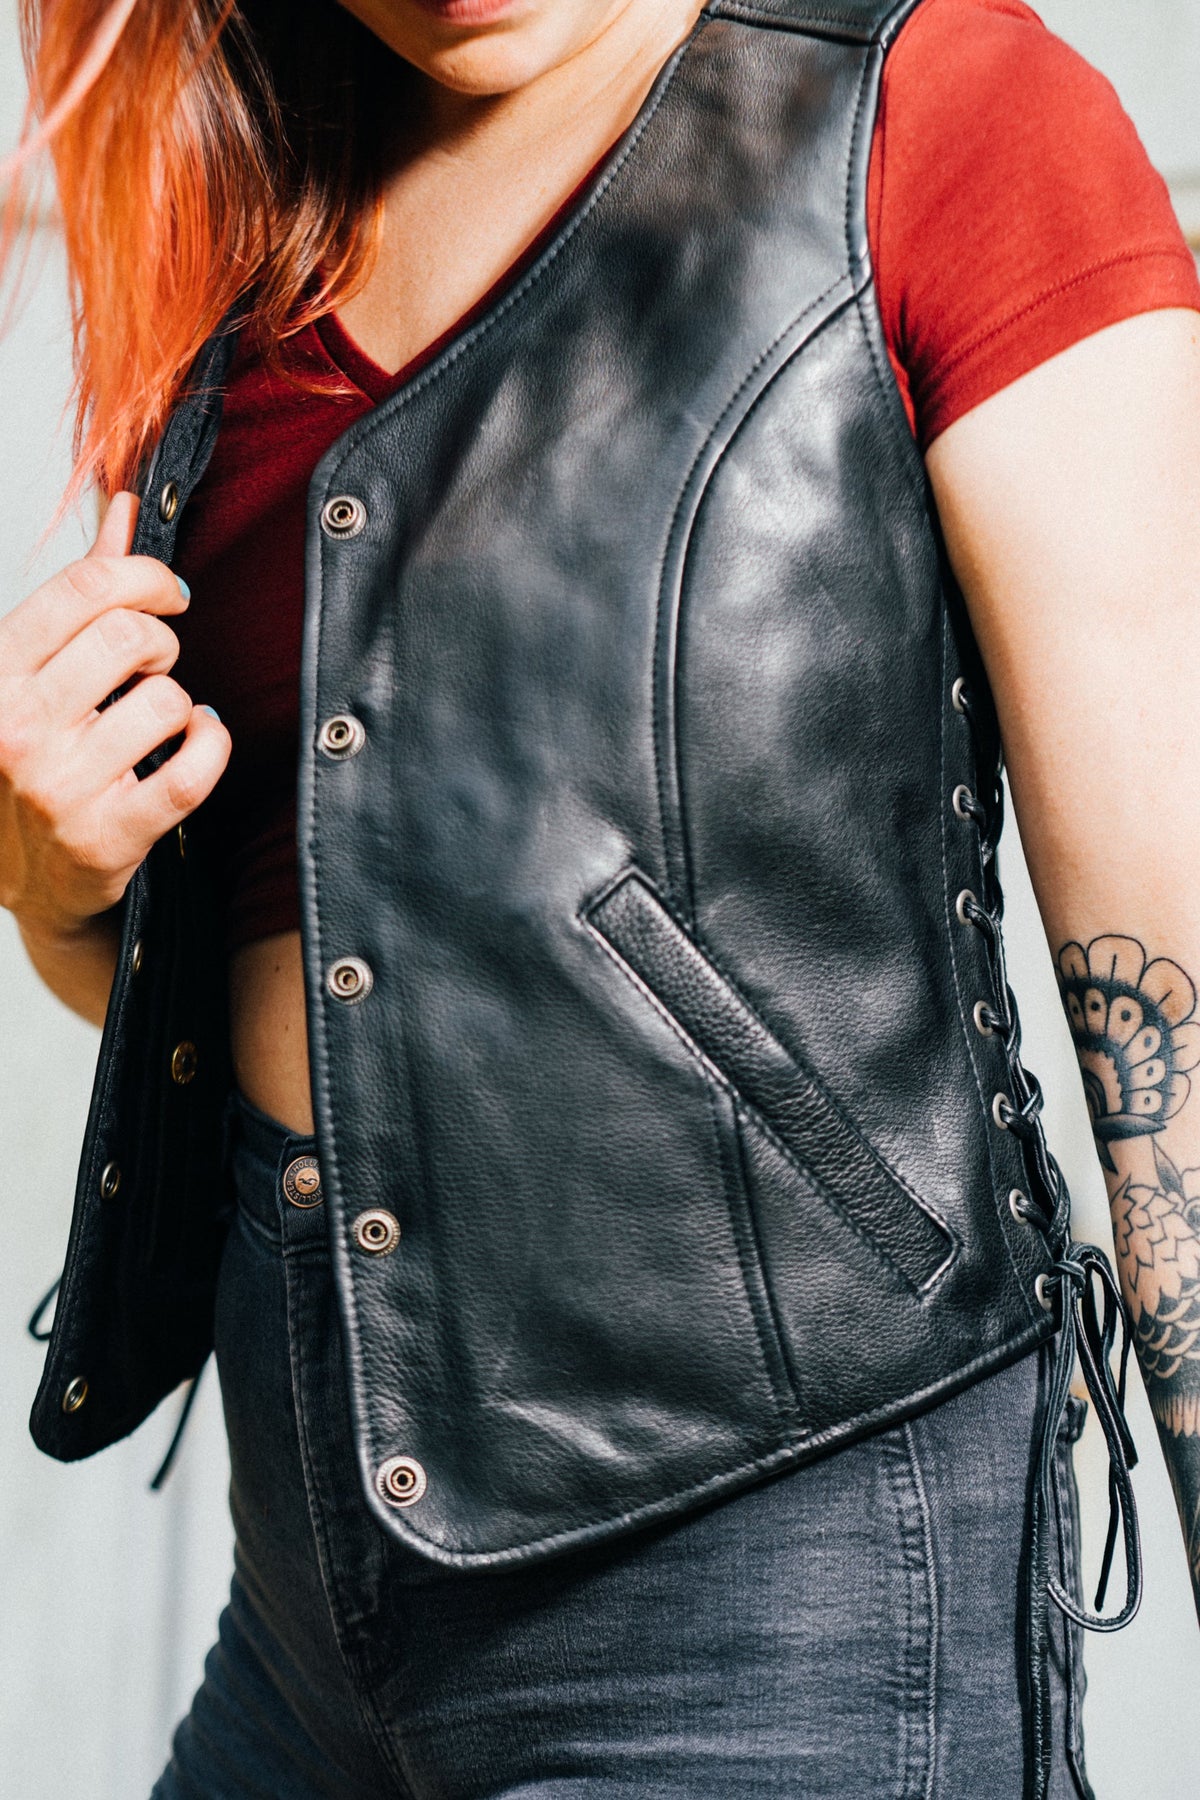 SPEEDY WOMEN Motorcycle Leather Vest